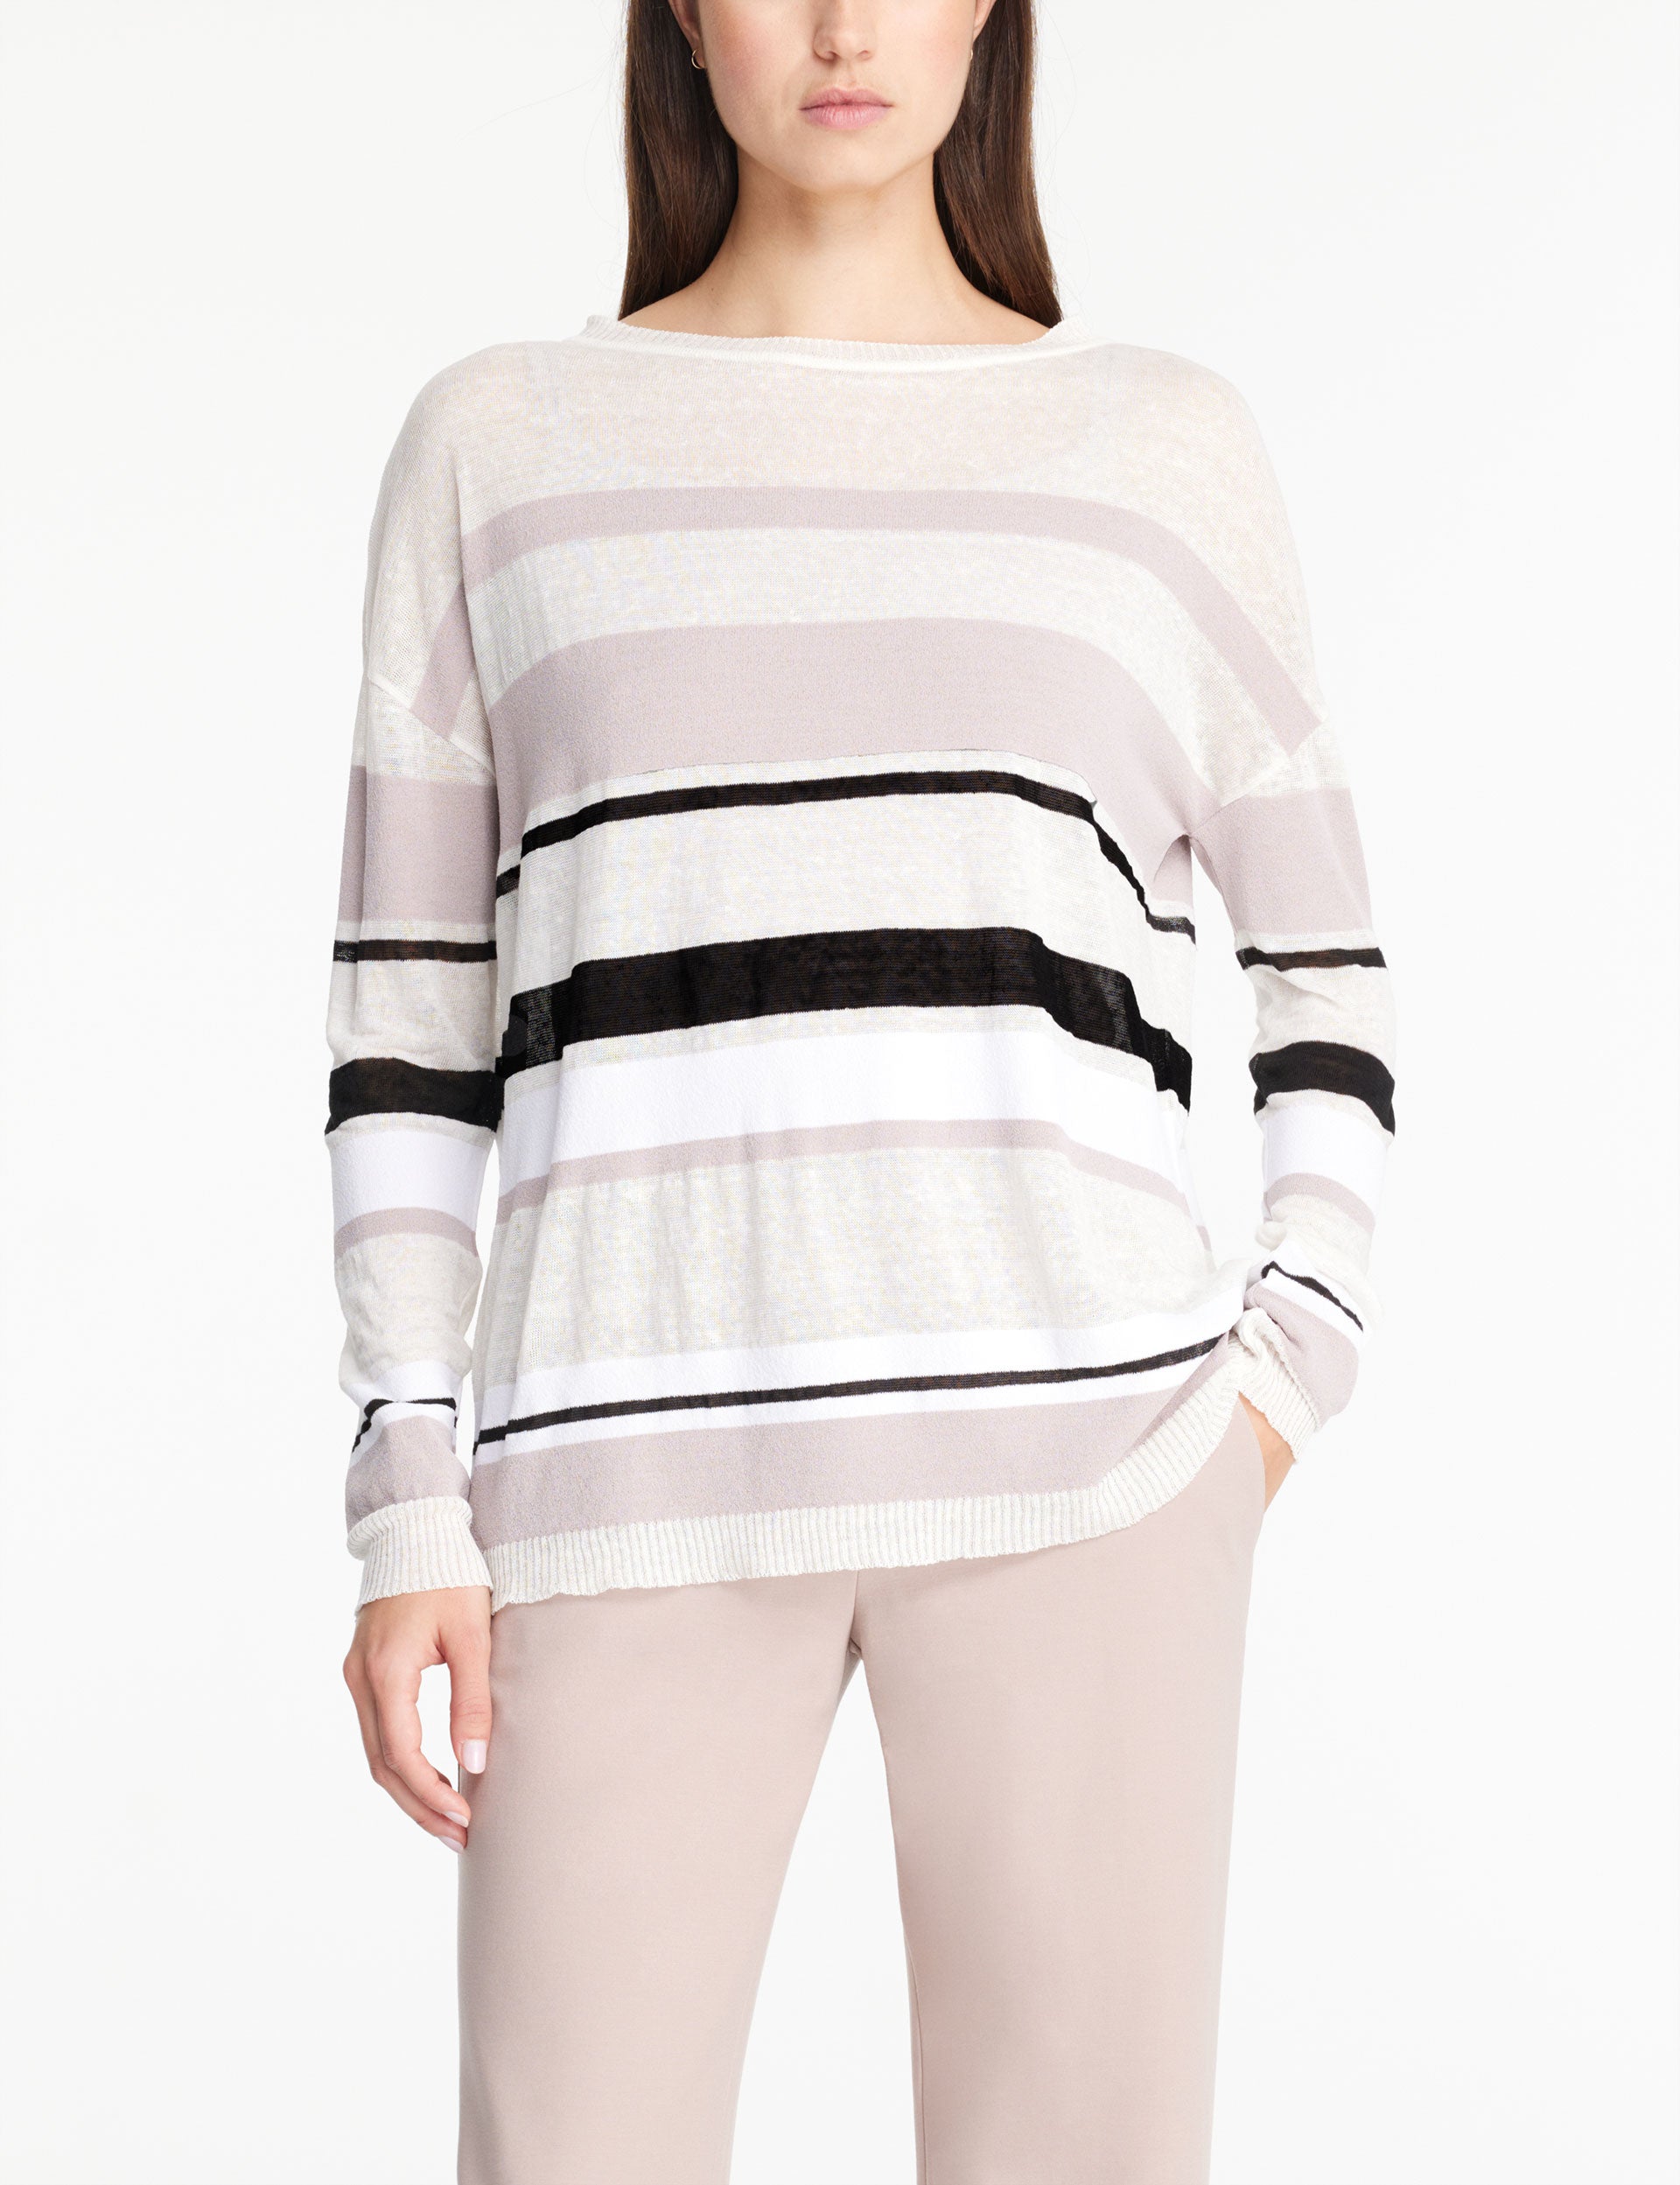 Sarah Pacini Striped Sweater Translucent